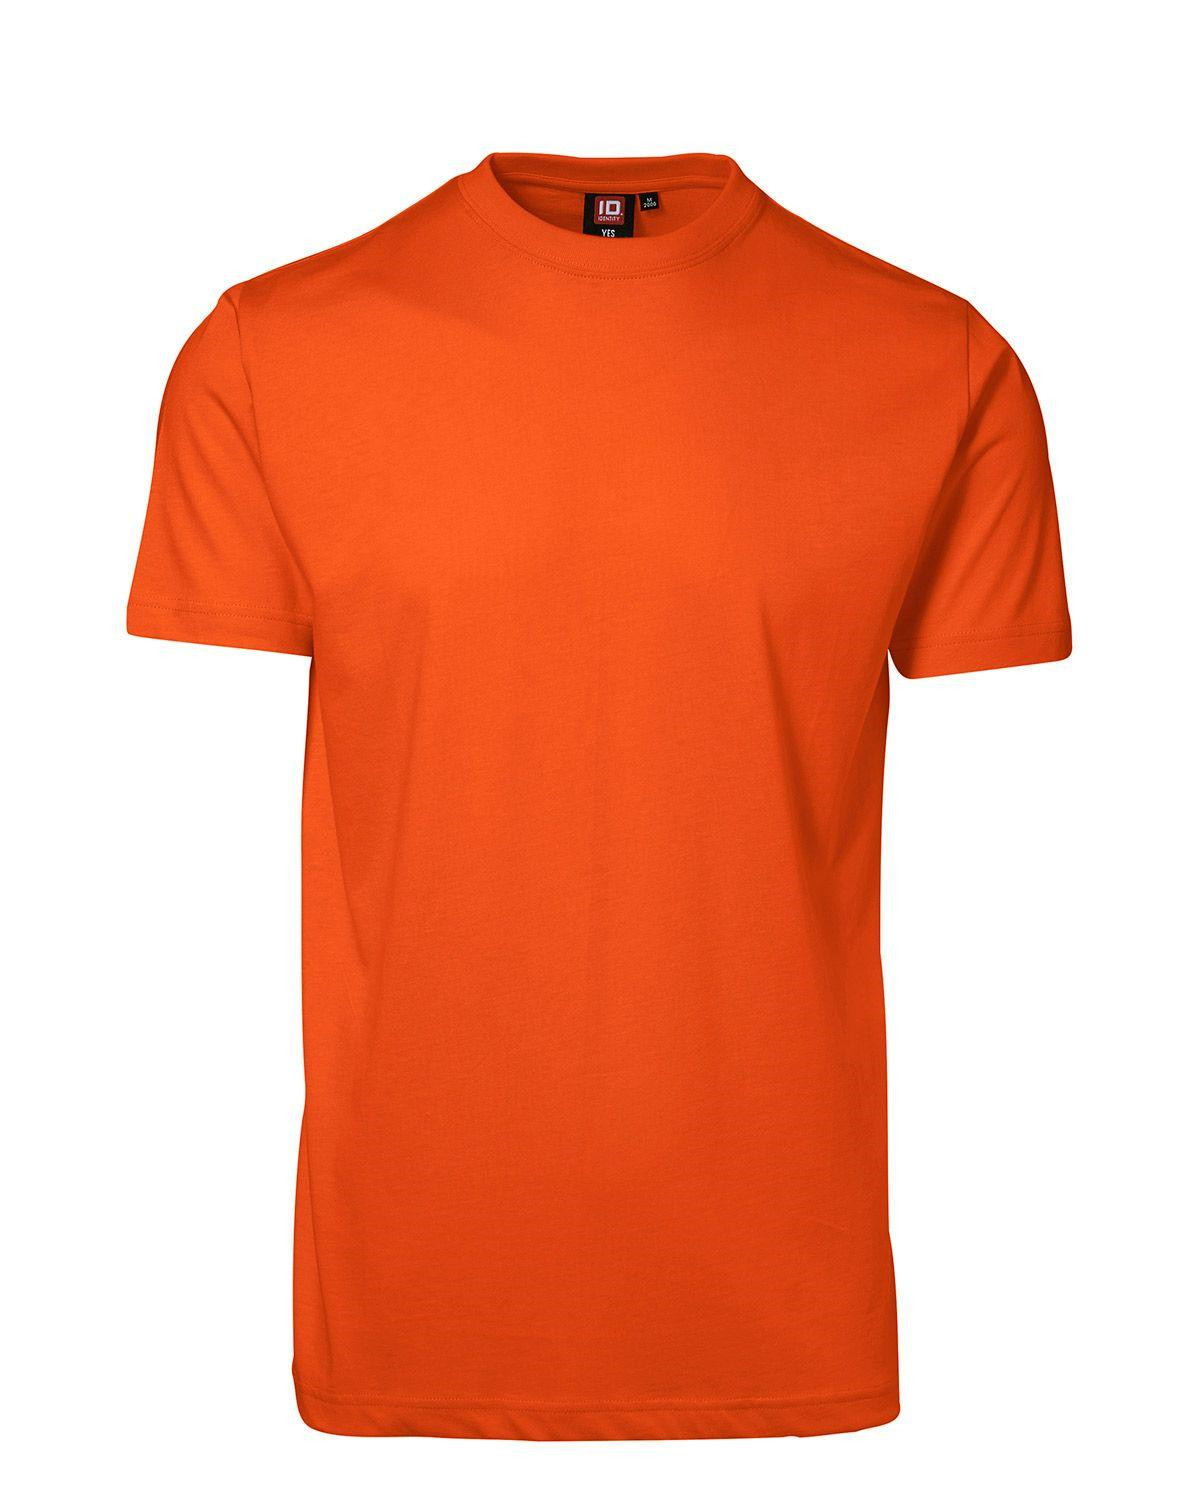 ID YES T-shirt (Orange, M)